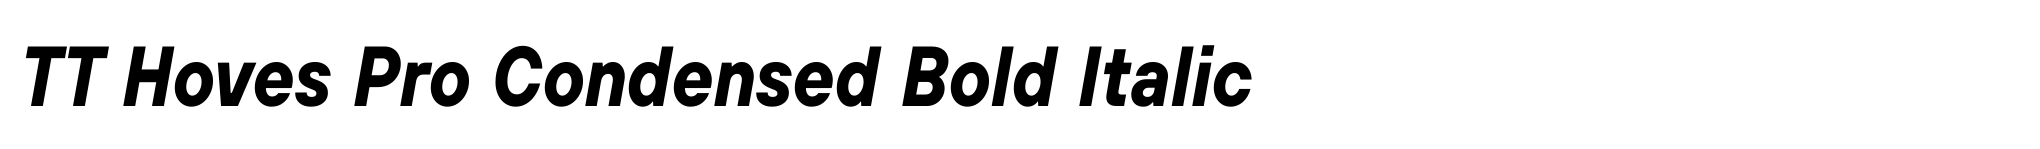 TT Hoves Pro Condensed Bold Italic image